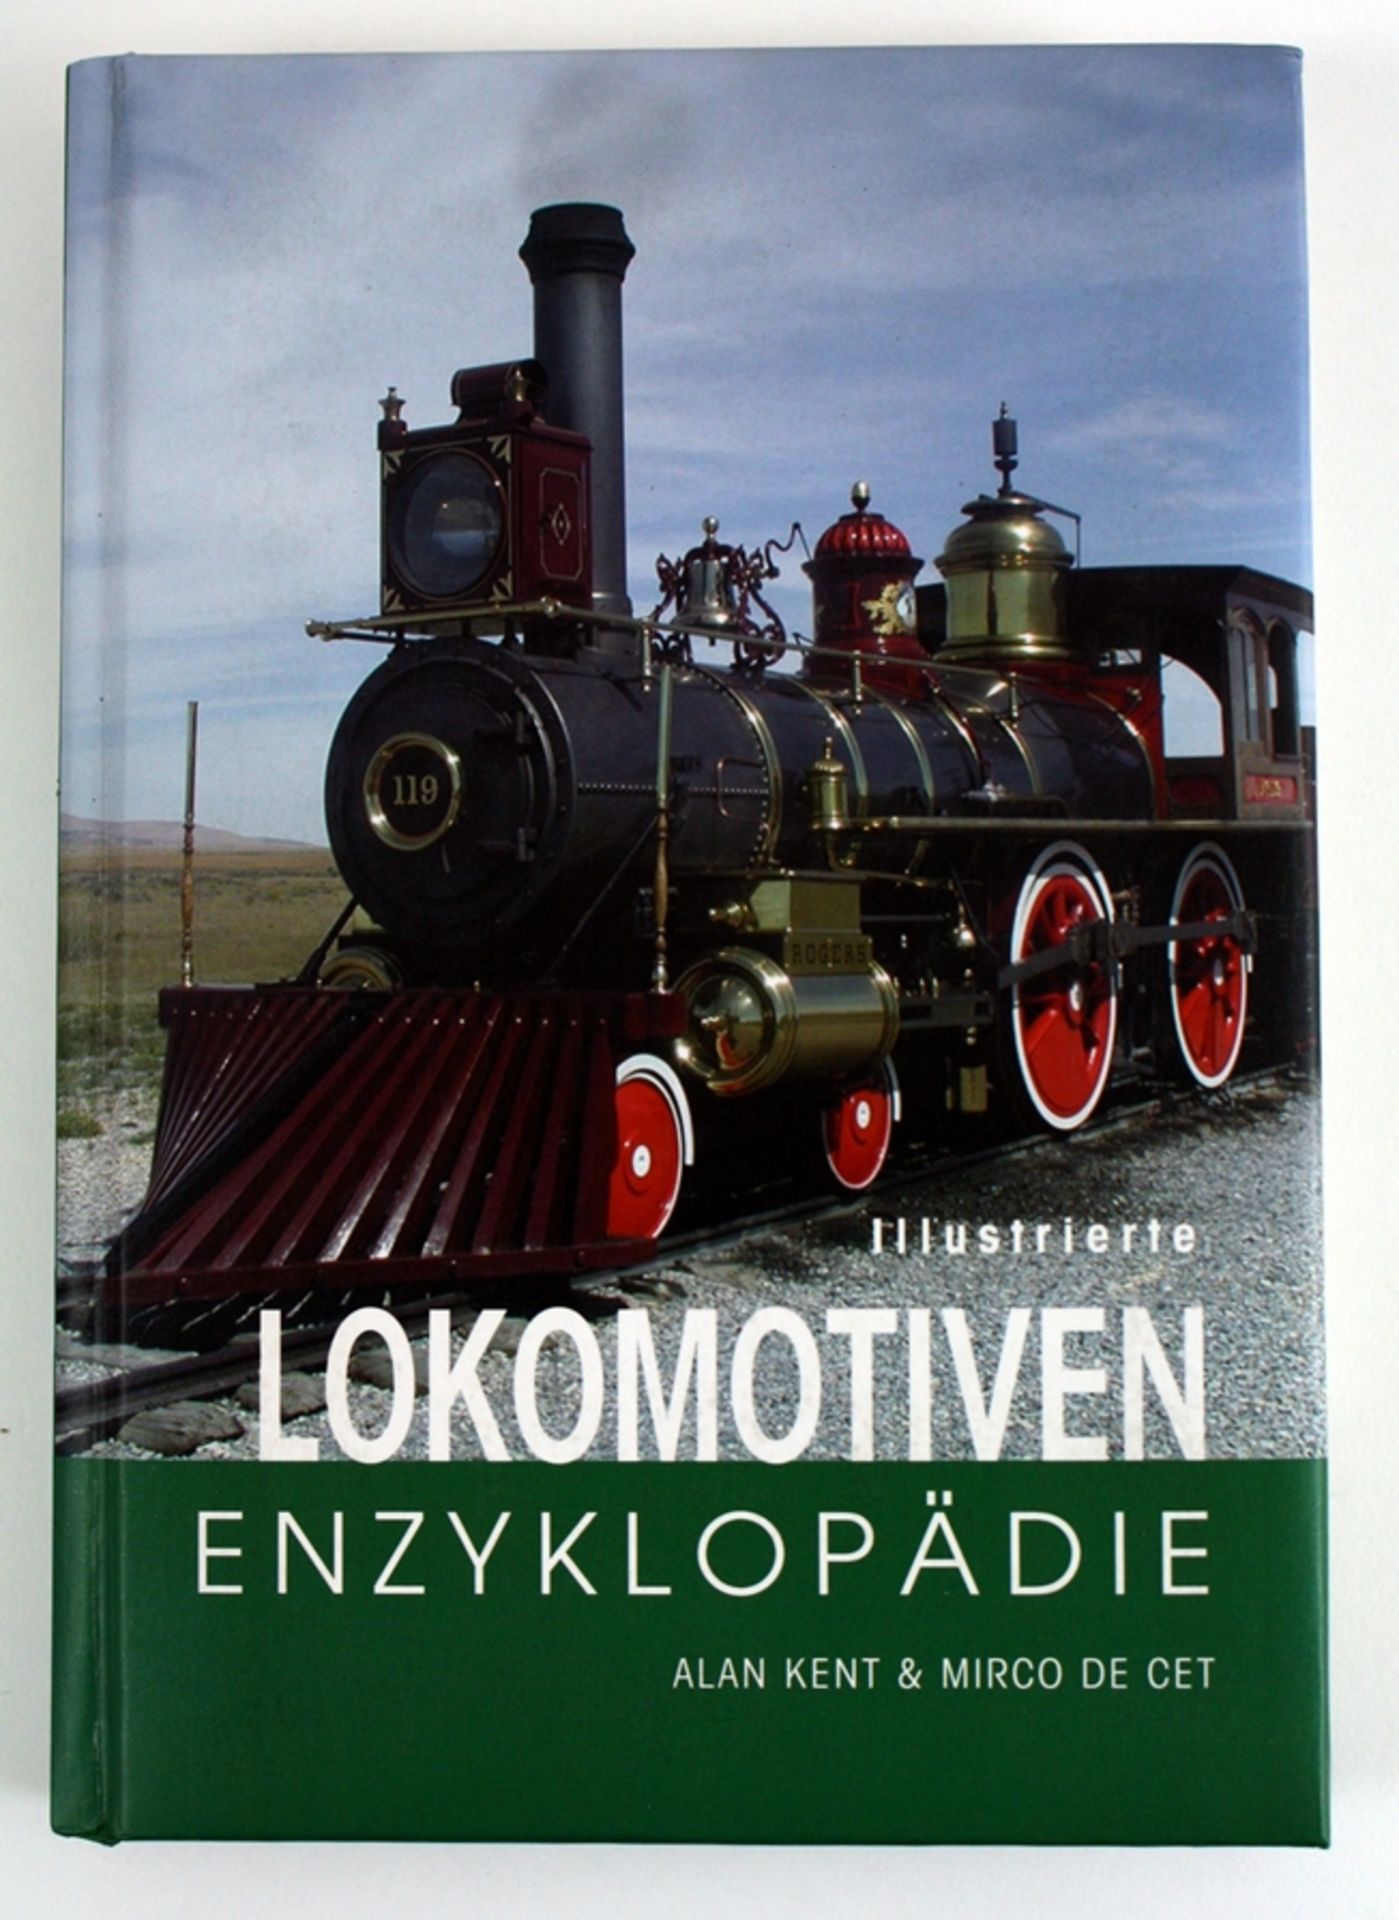 Mirco De Cet & Alain Kent. 'Illustrierte Lokomotiven Enzyklopädie'. Edition Dörfler, Nebel Verlag o